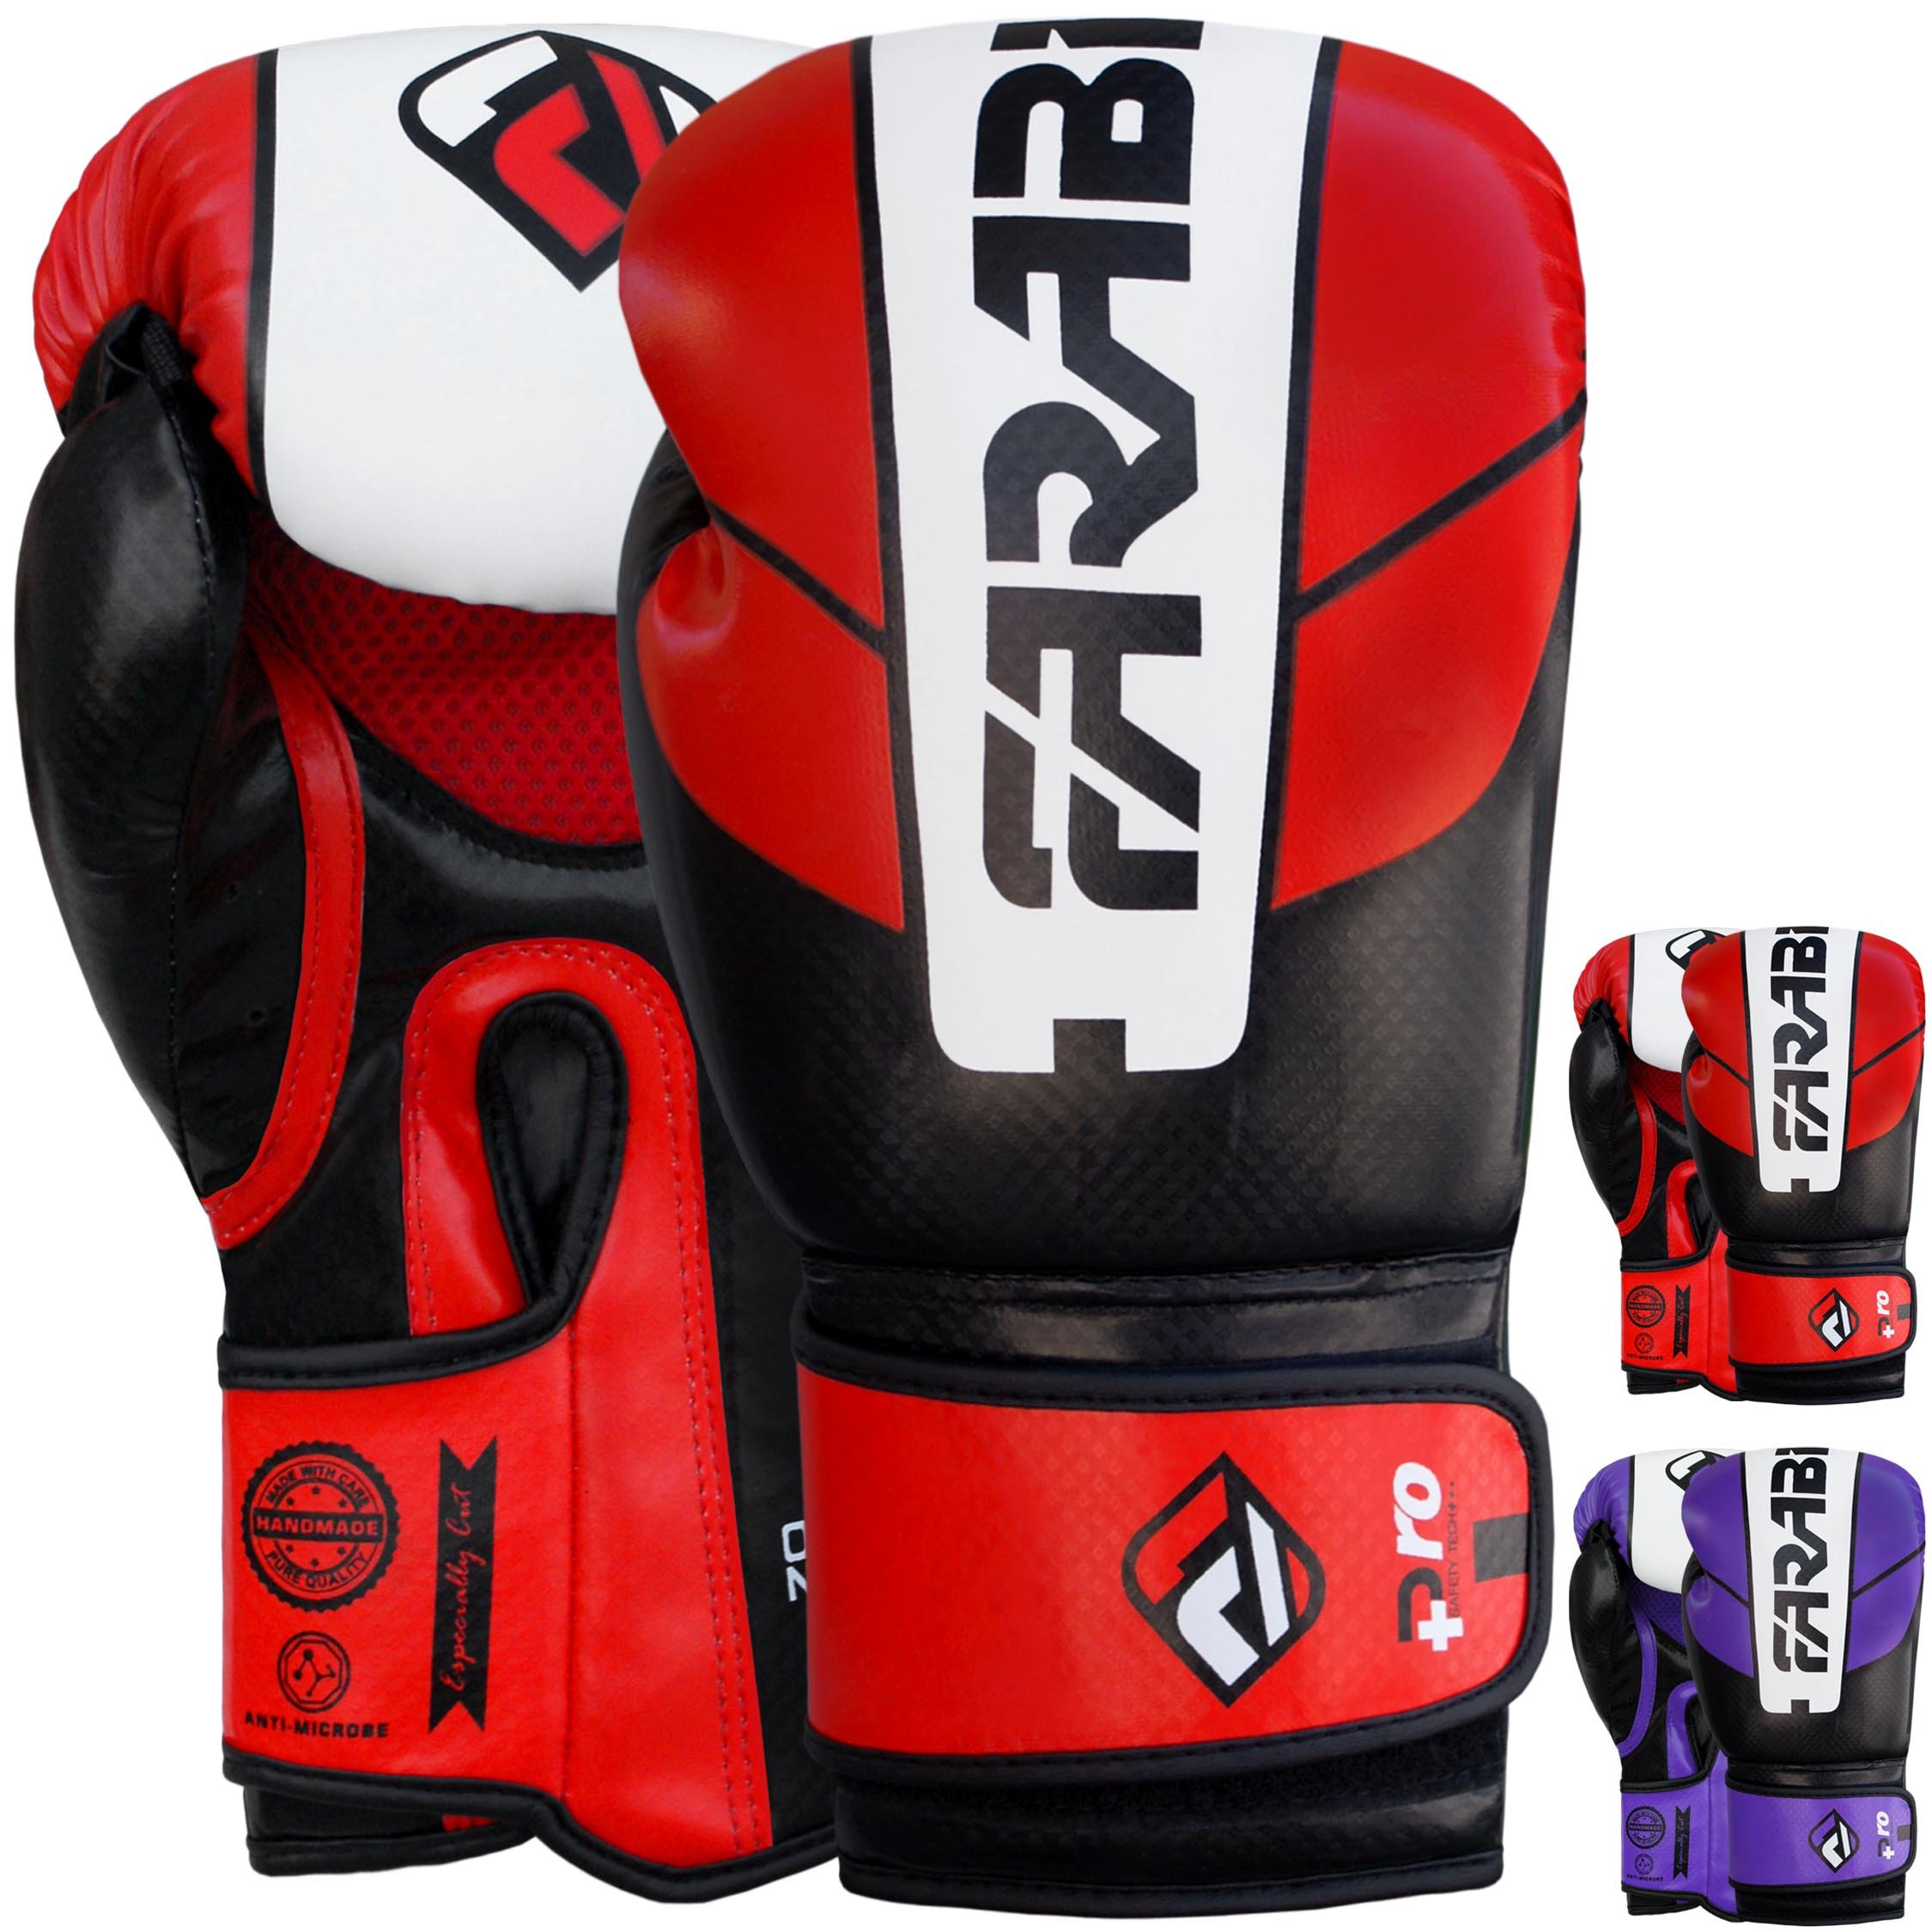 Farabi Boxing Gloves for Training Punching Sparring (Red/Black, 14-oz)